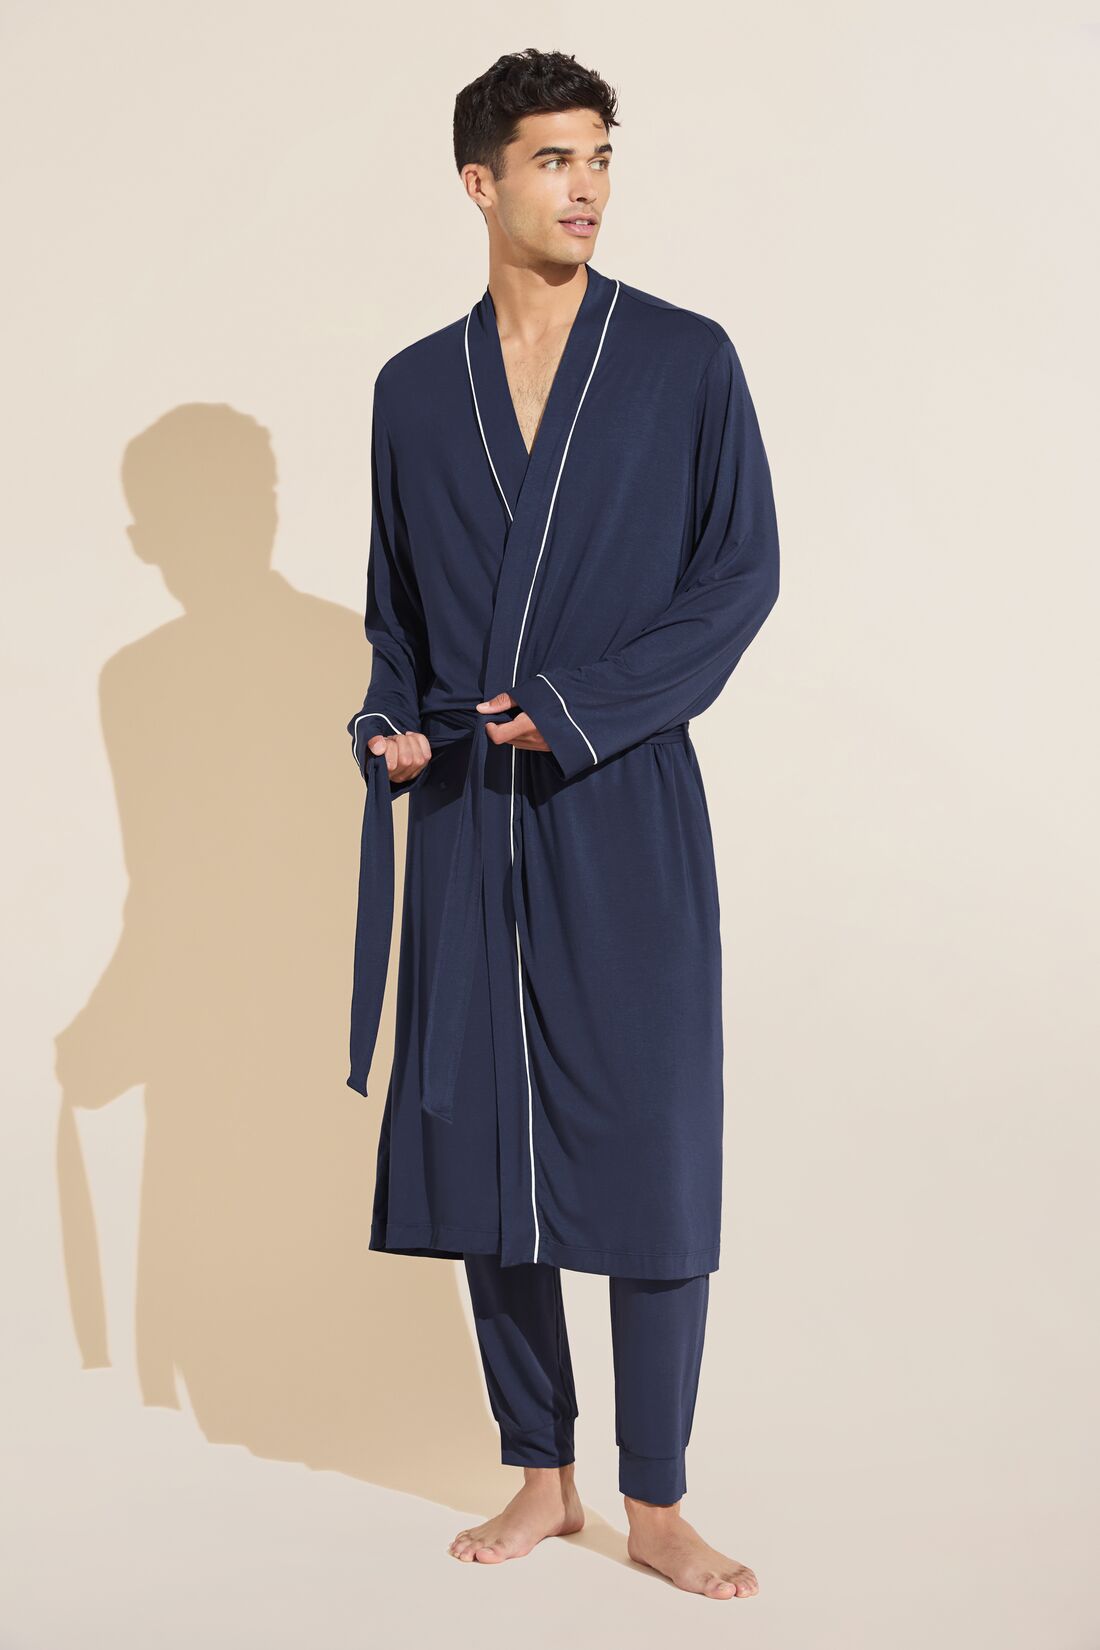 William TENCEL™ Modal Robe - True Navy/Ivory